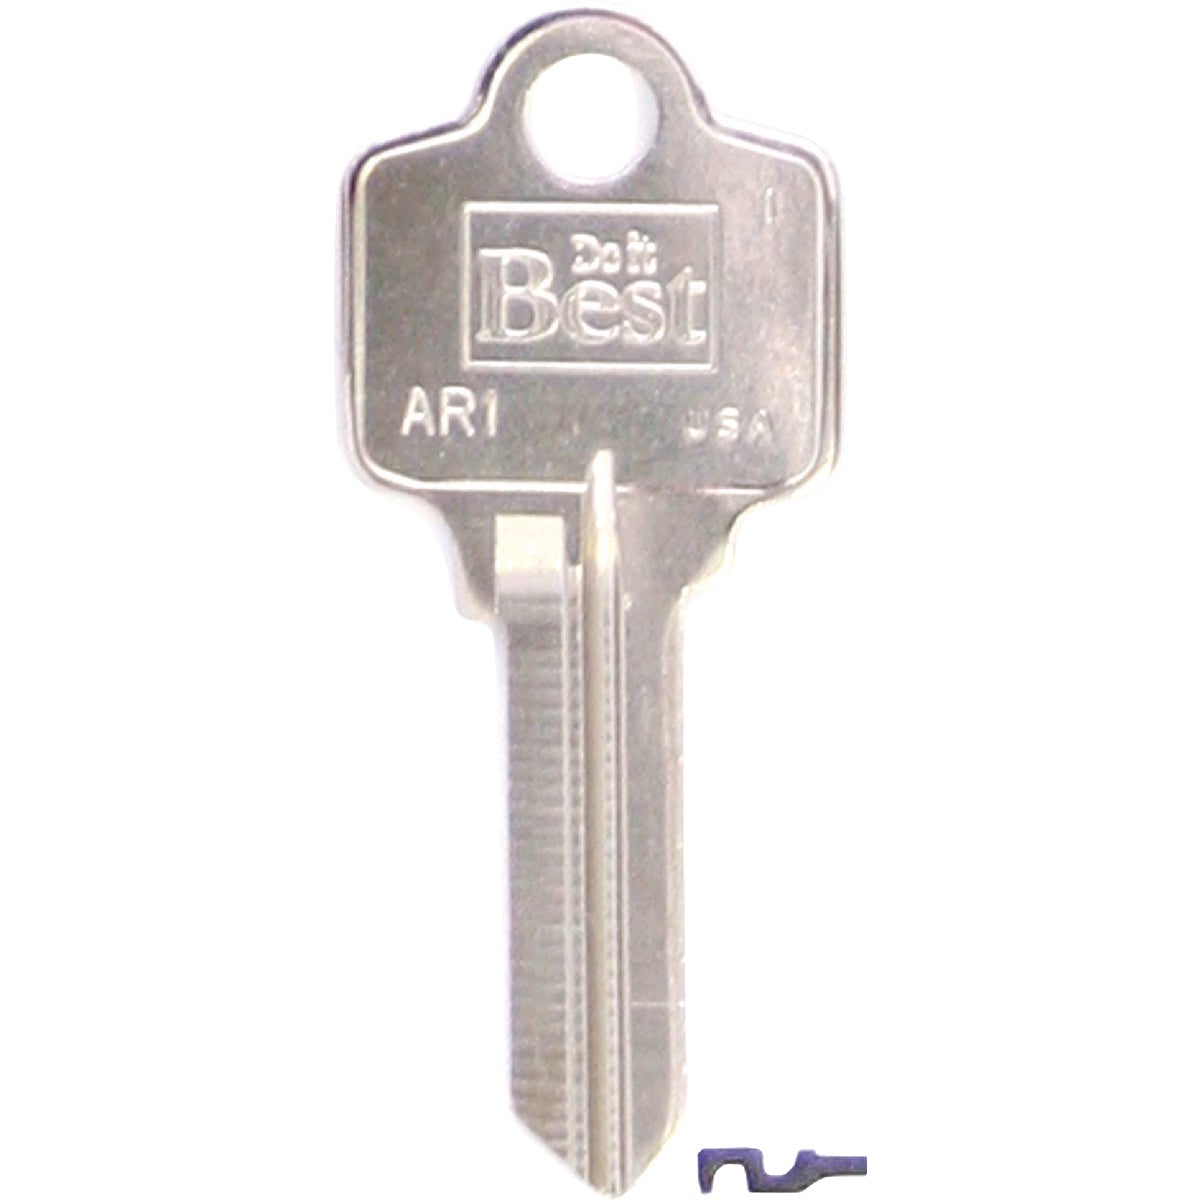 Do it Best ARROW Nickel Plated House Key, AR1- / 1179 DIB (10-Pack)